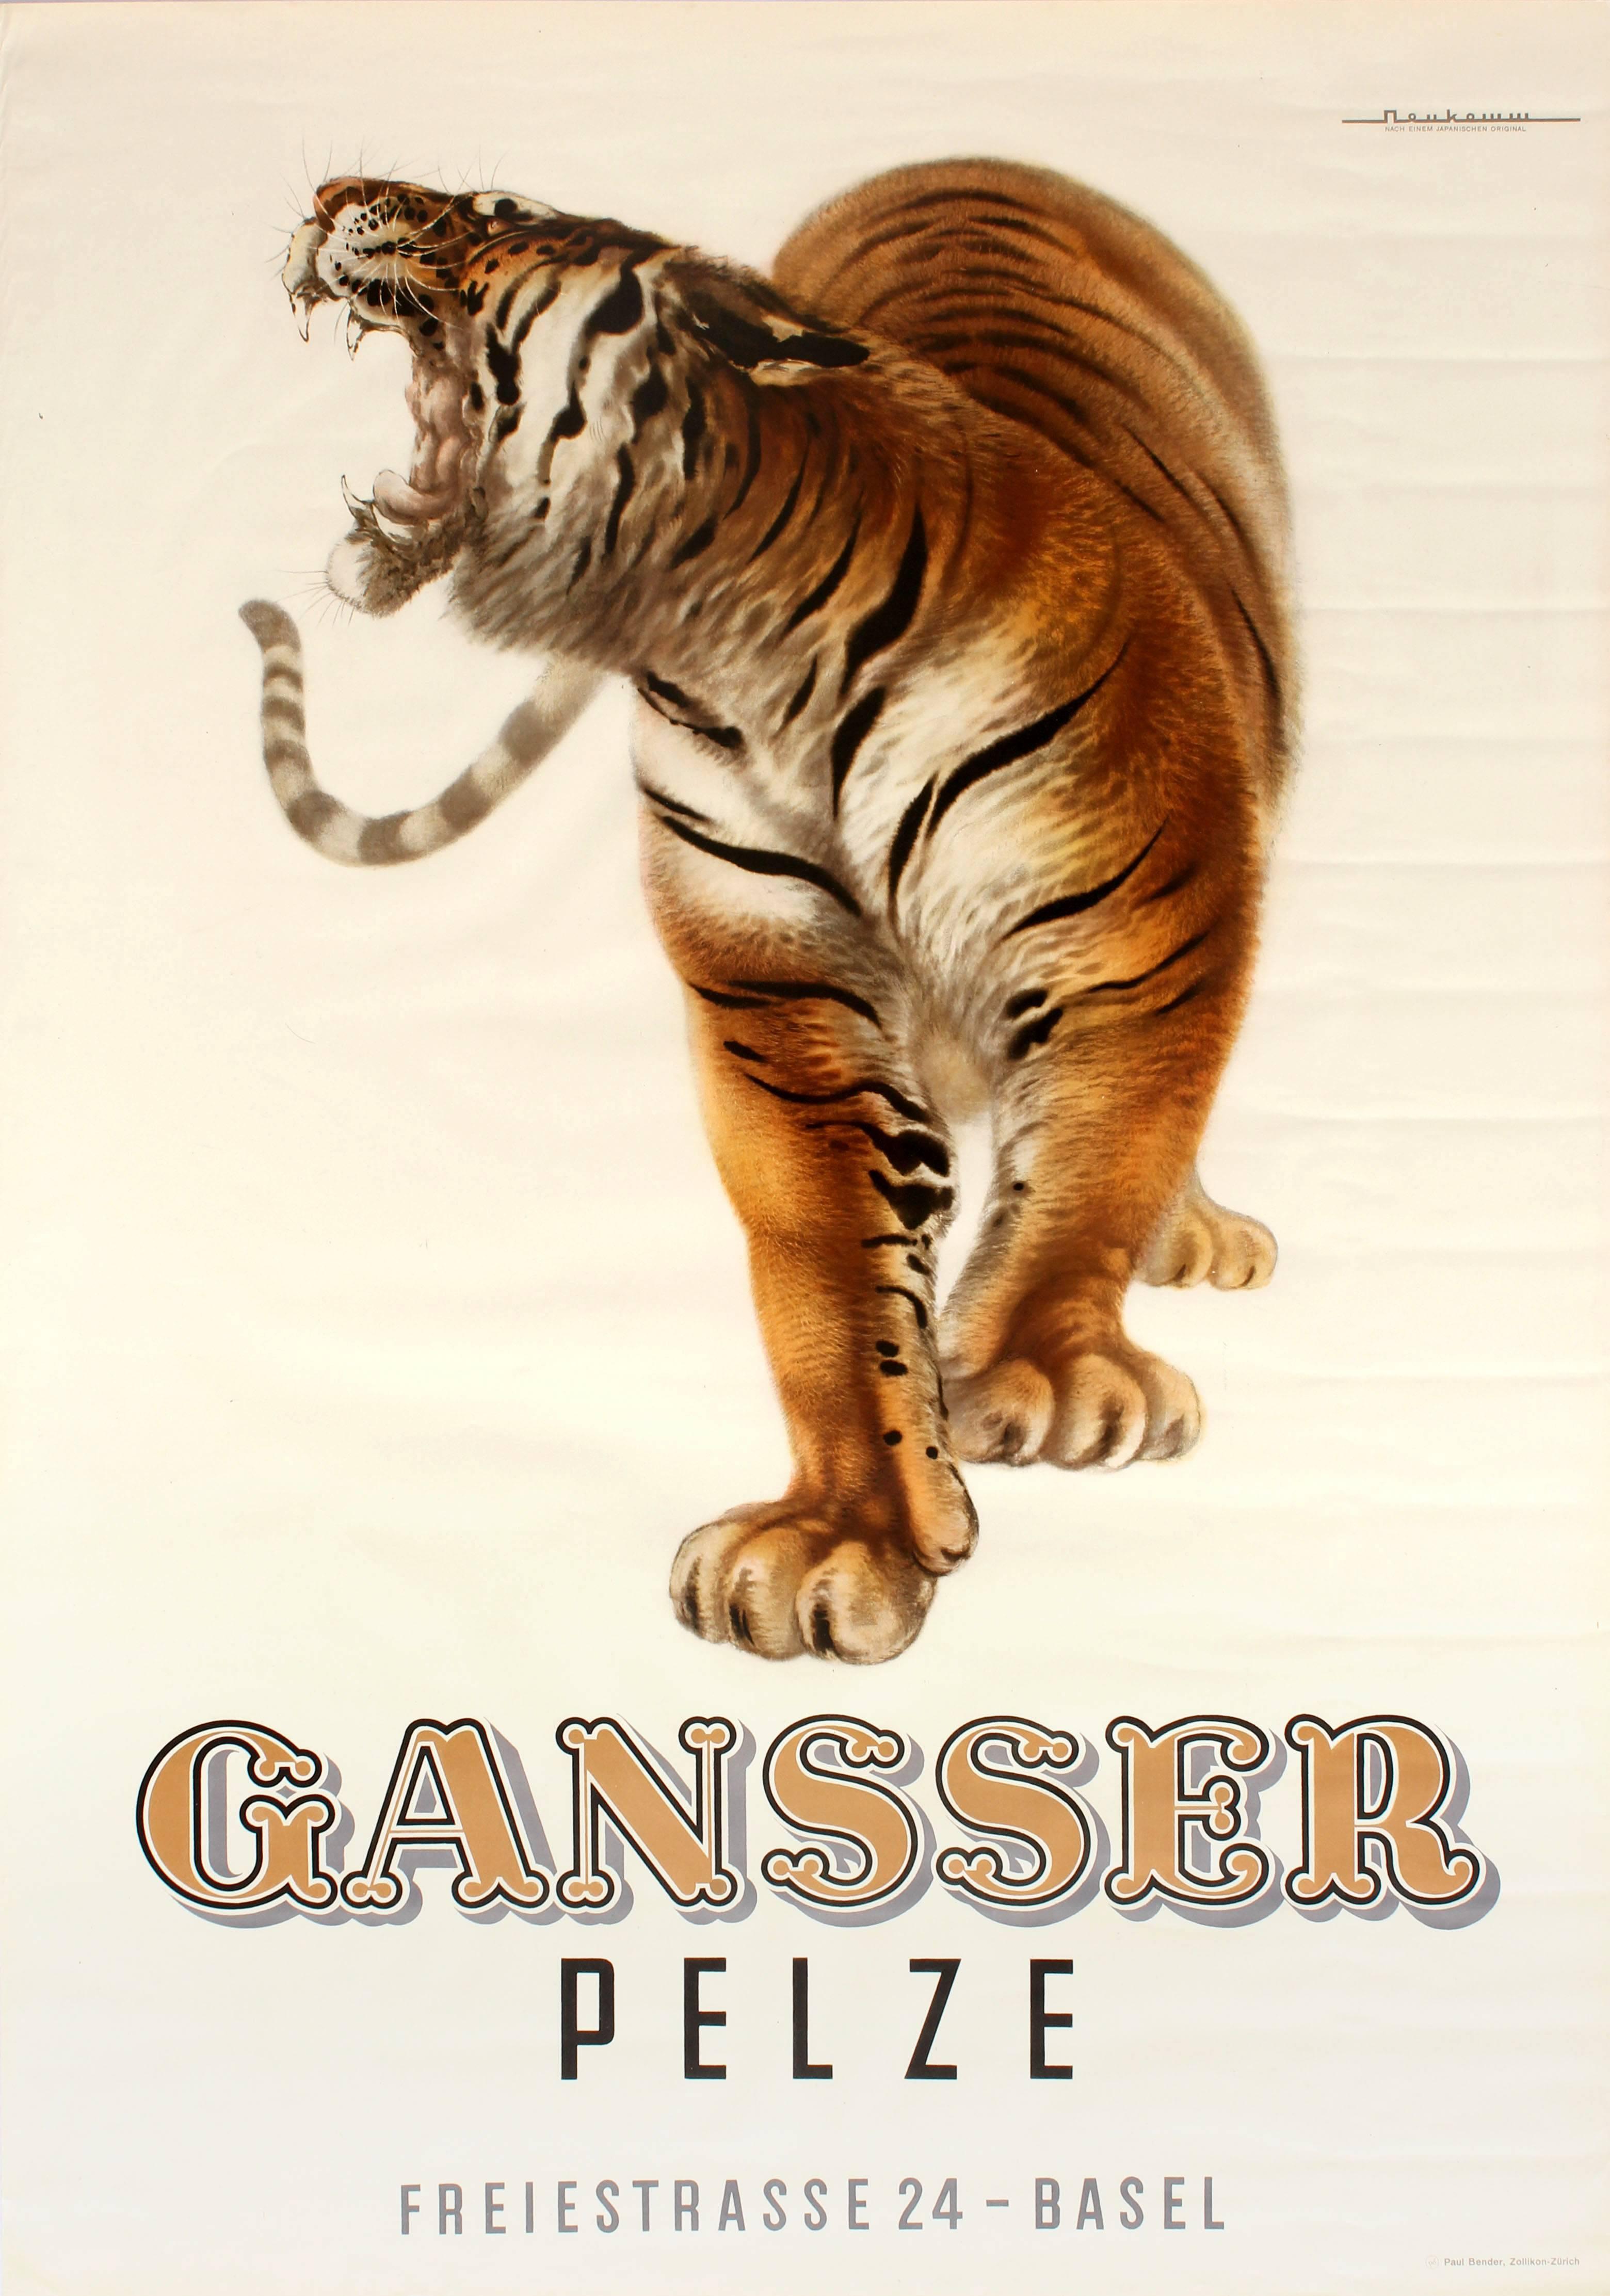 Emil Alfred Neukomm Print - Original Vintage Swiss Advertising Poster For Gansser Pelze Featuring A Tiger